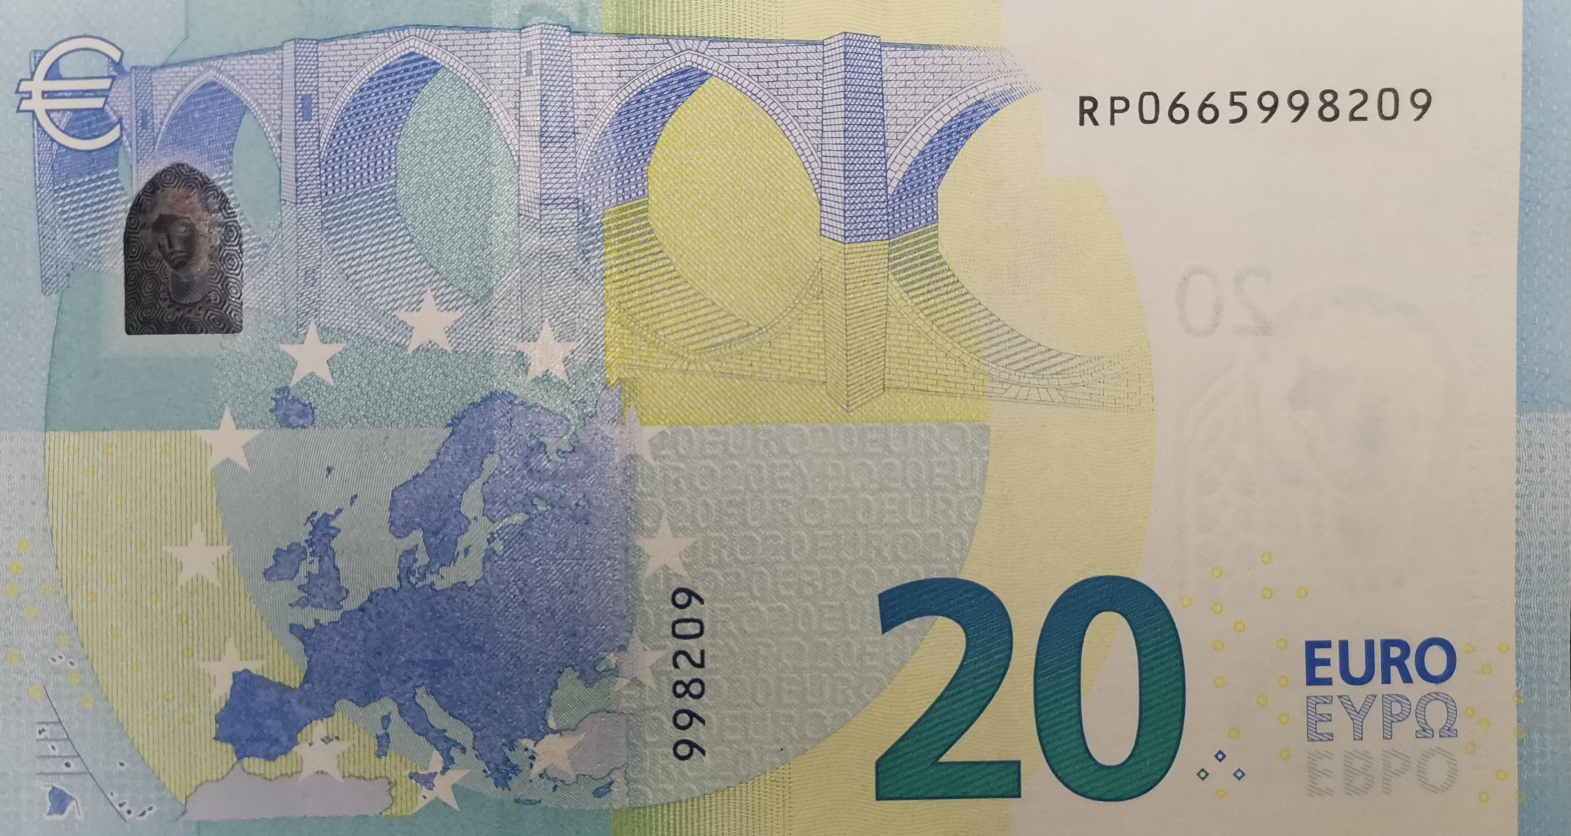 European Monetary Union New Signature 20 Euro Note B110r4 Confirmed Banknotenews